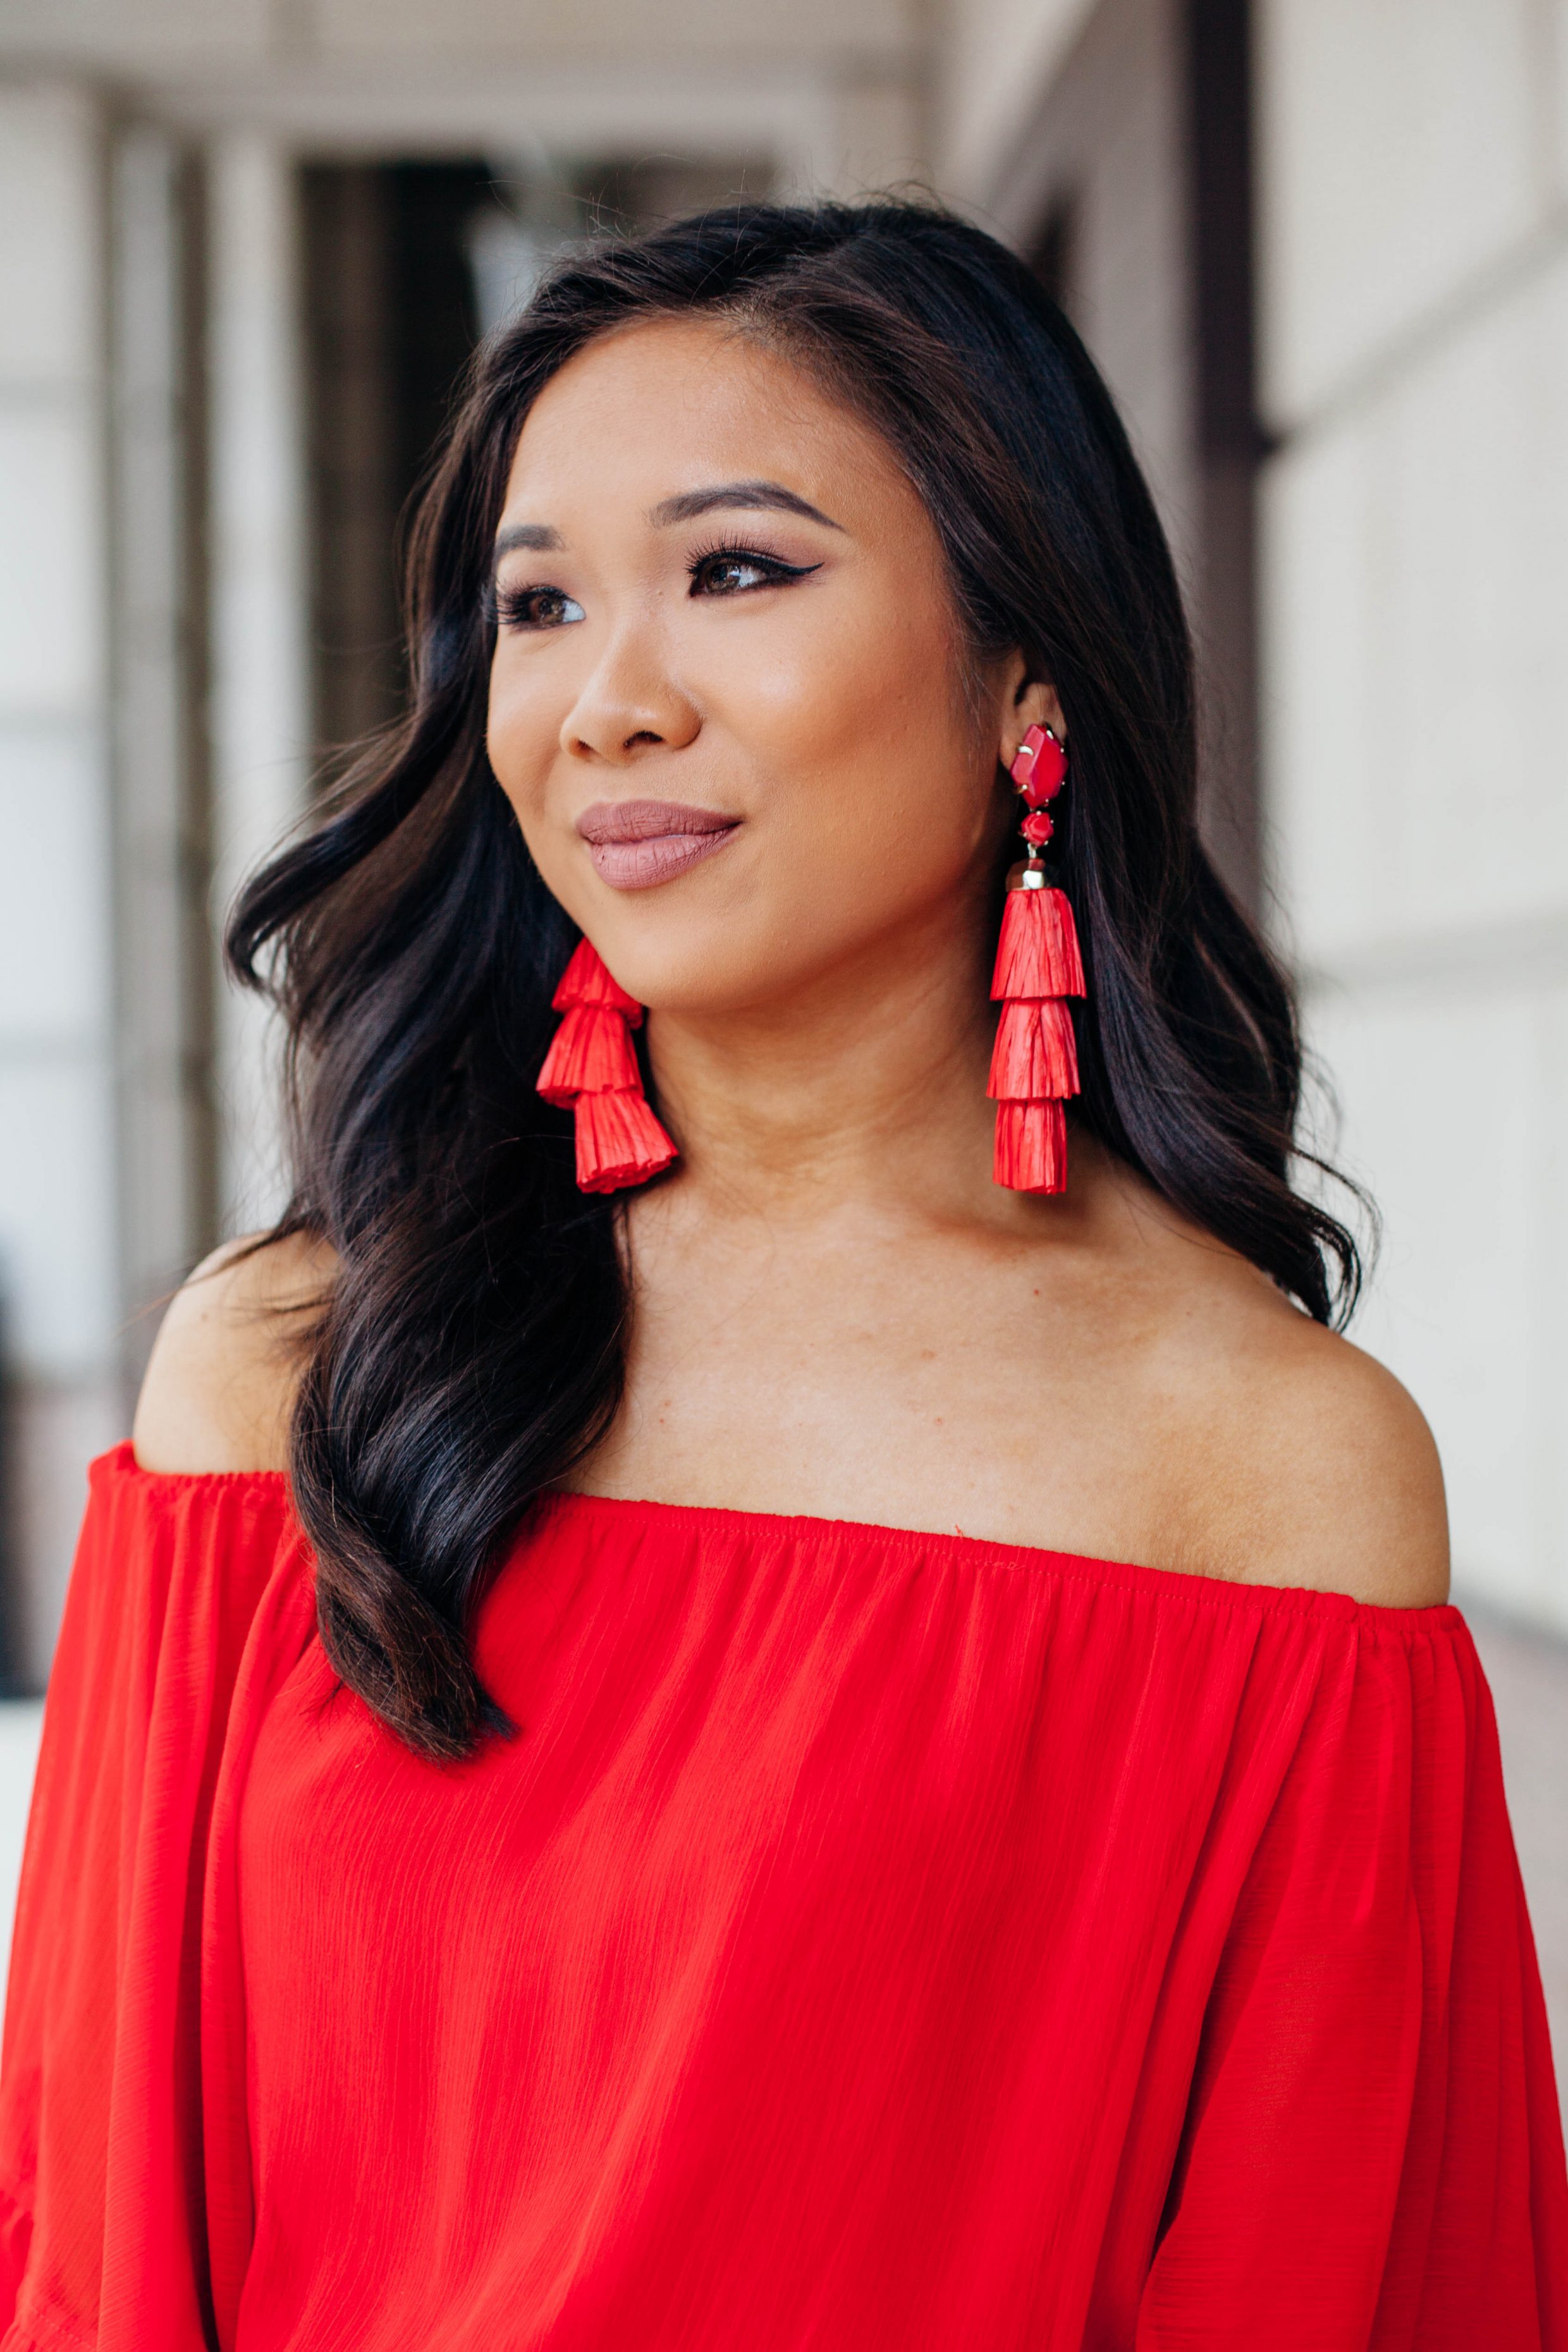 Hoang-Kim wears Kendra Scott Denise tassel earrings with a red off the shoulder romper